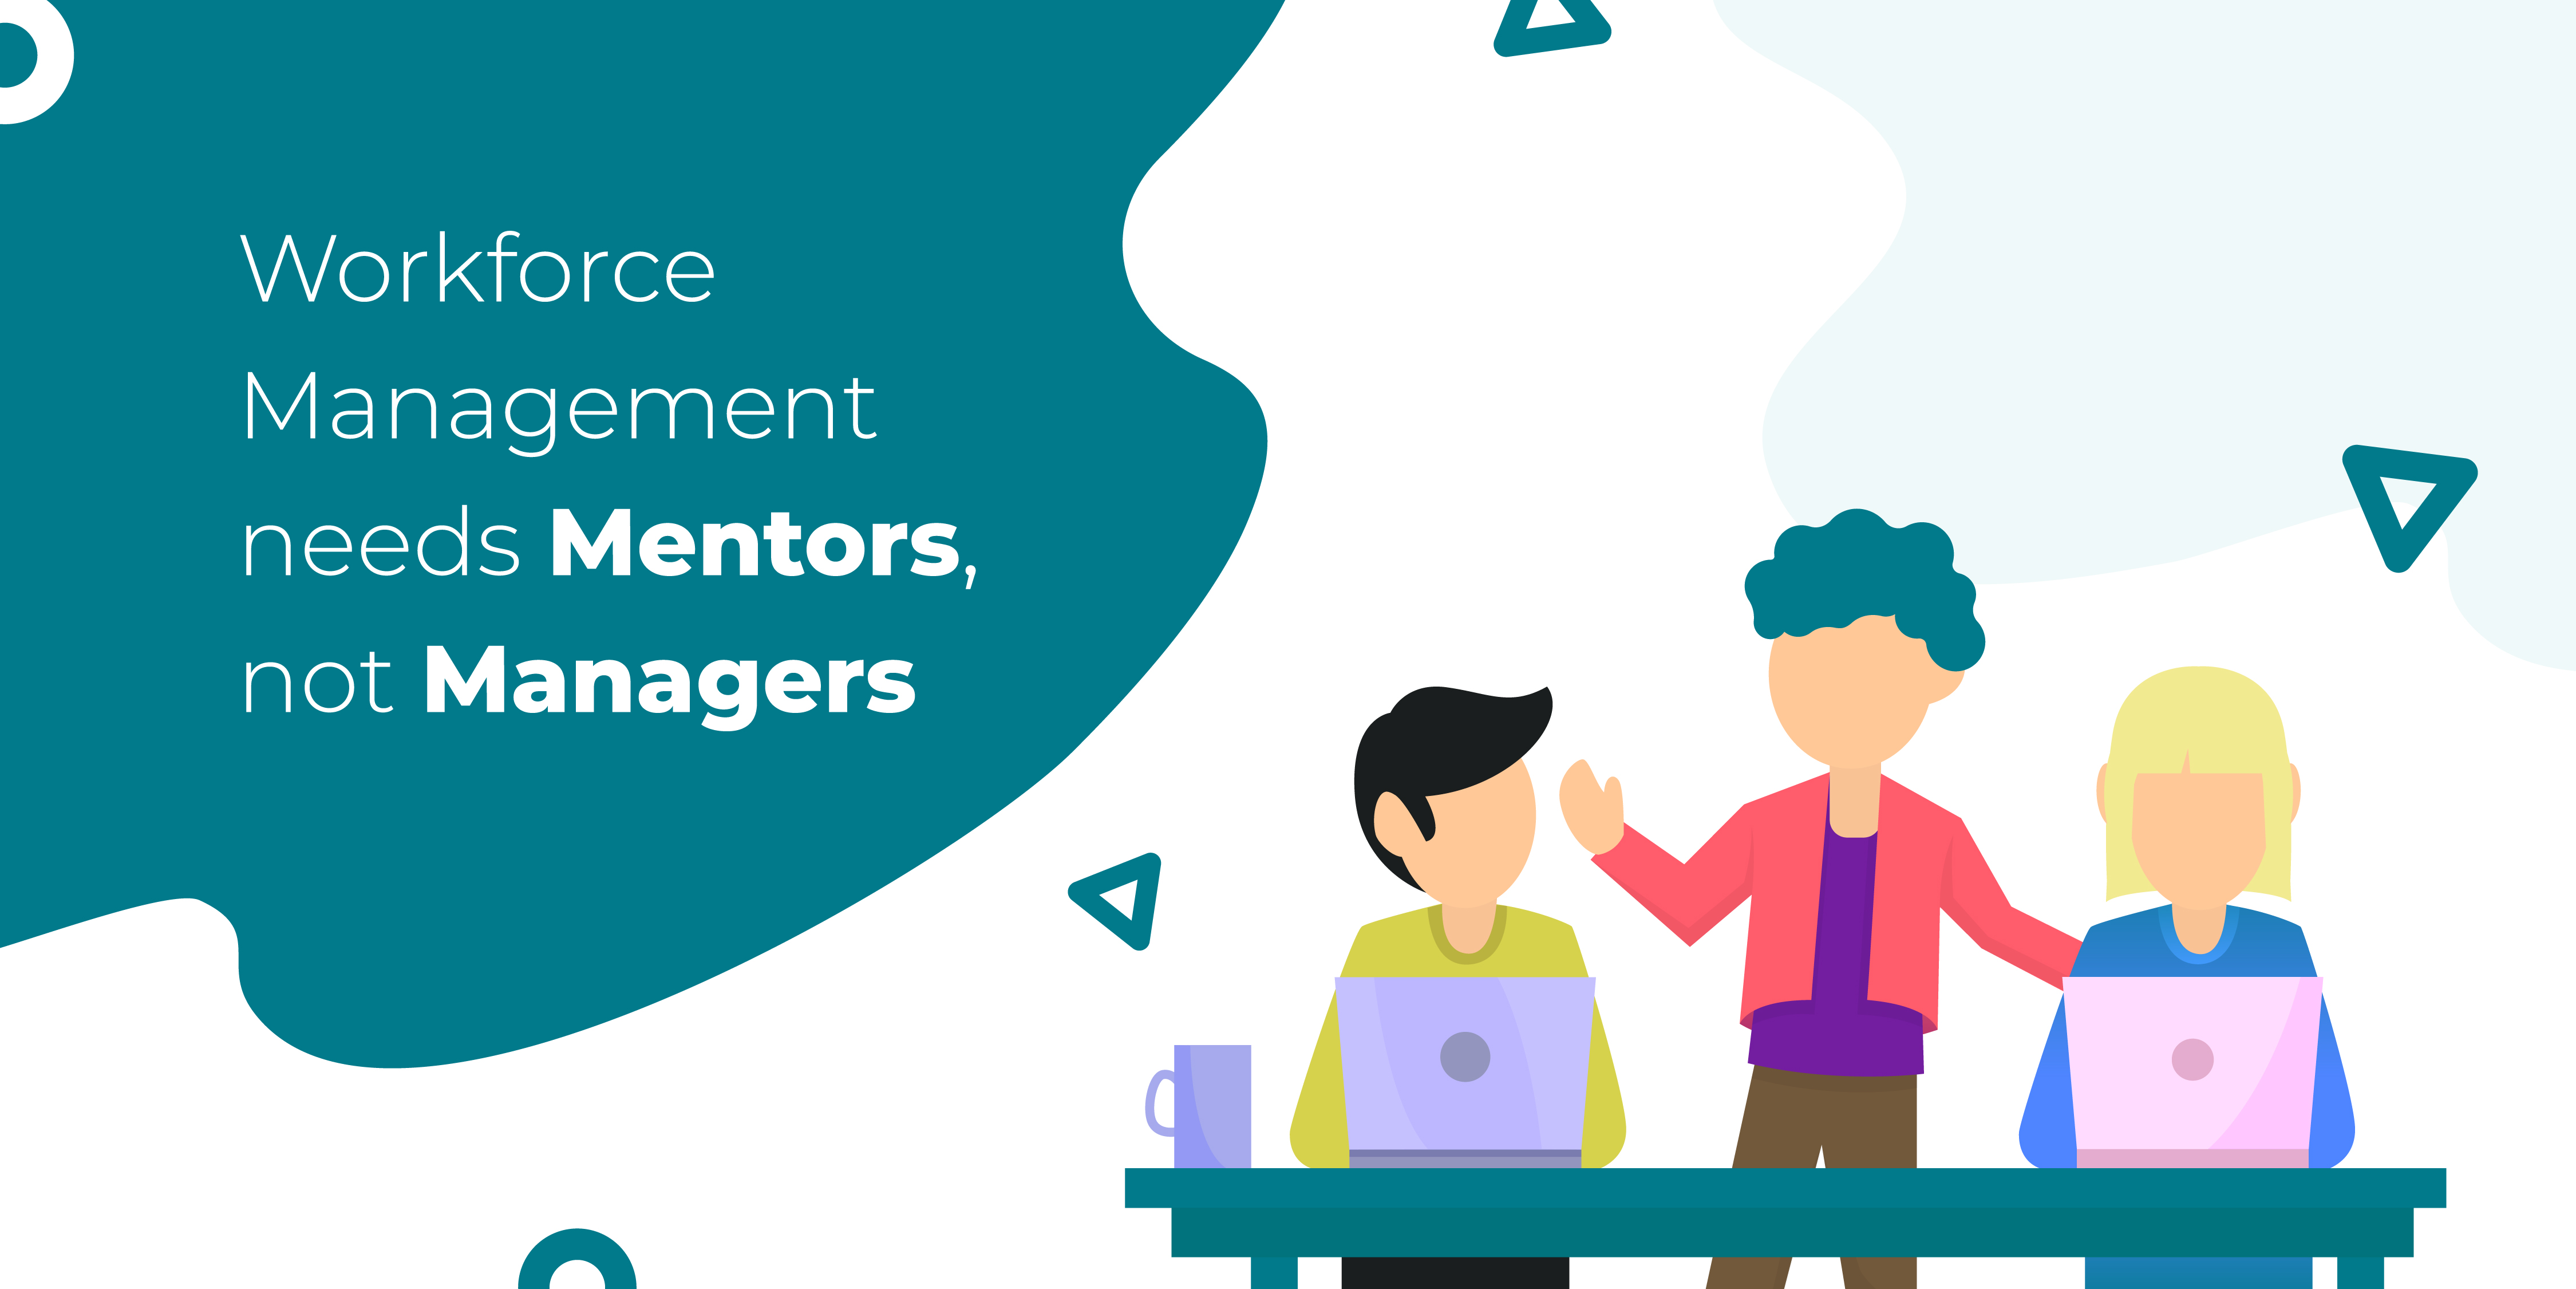 Workforce Management needs mentors, not managers